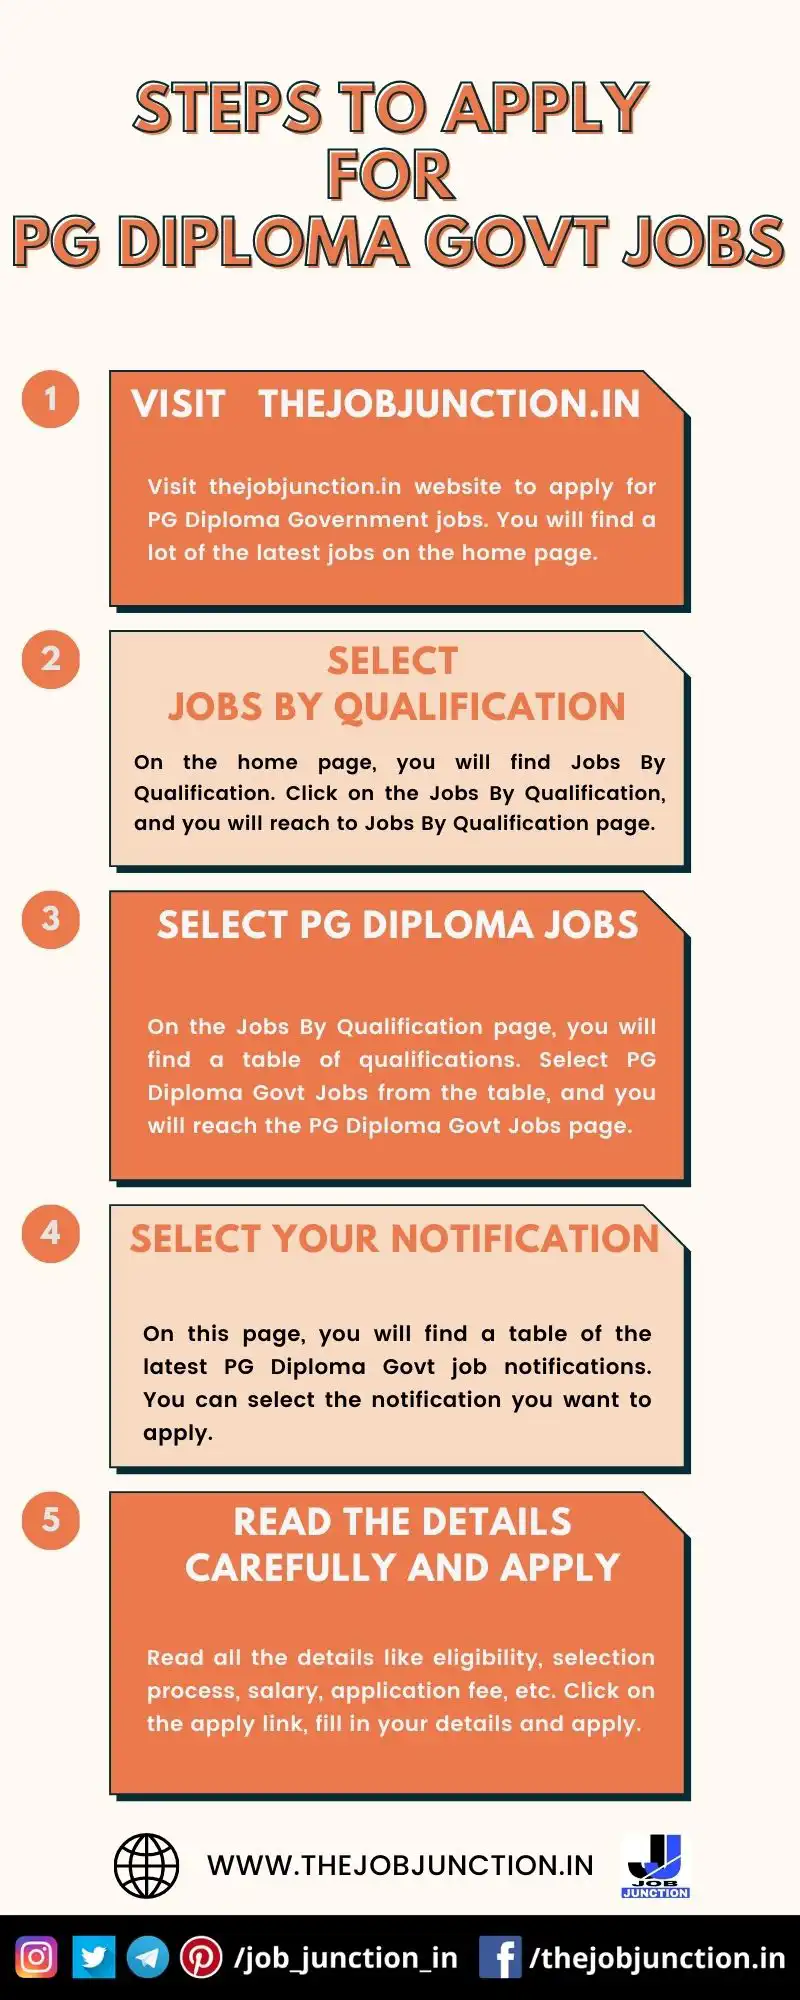 STEPS TO APPLY FOR PG DIPLOMA GOVT JOBS